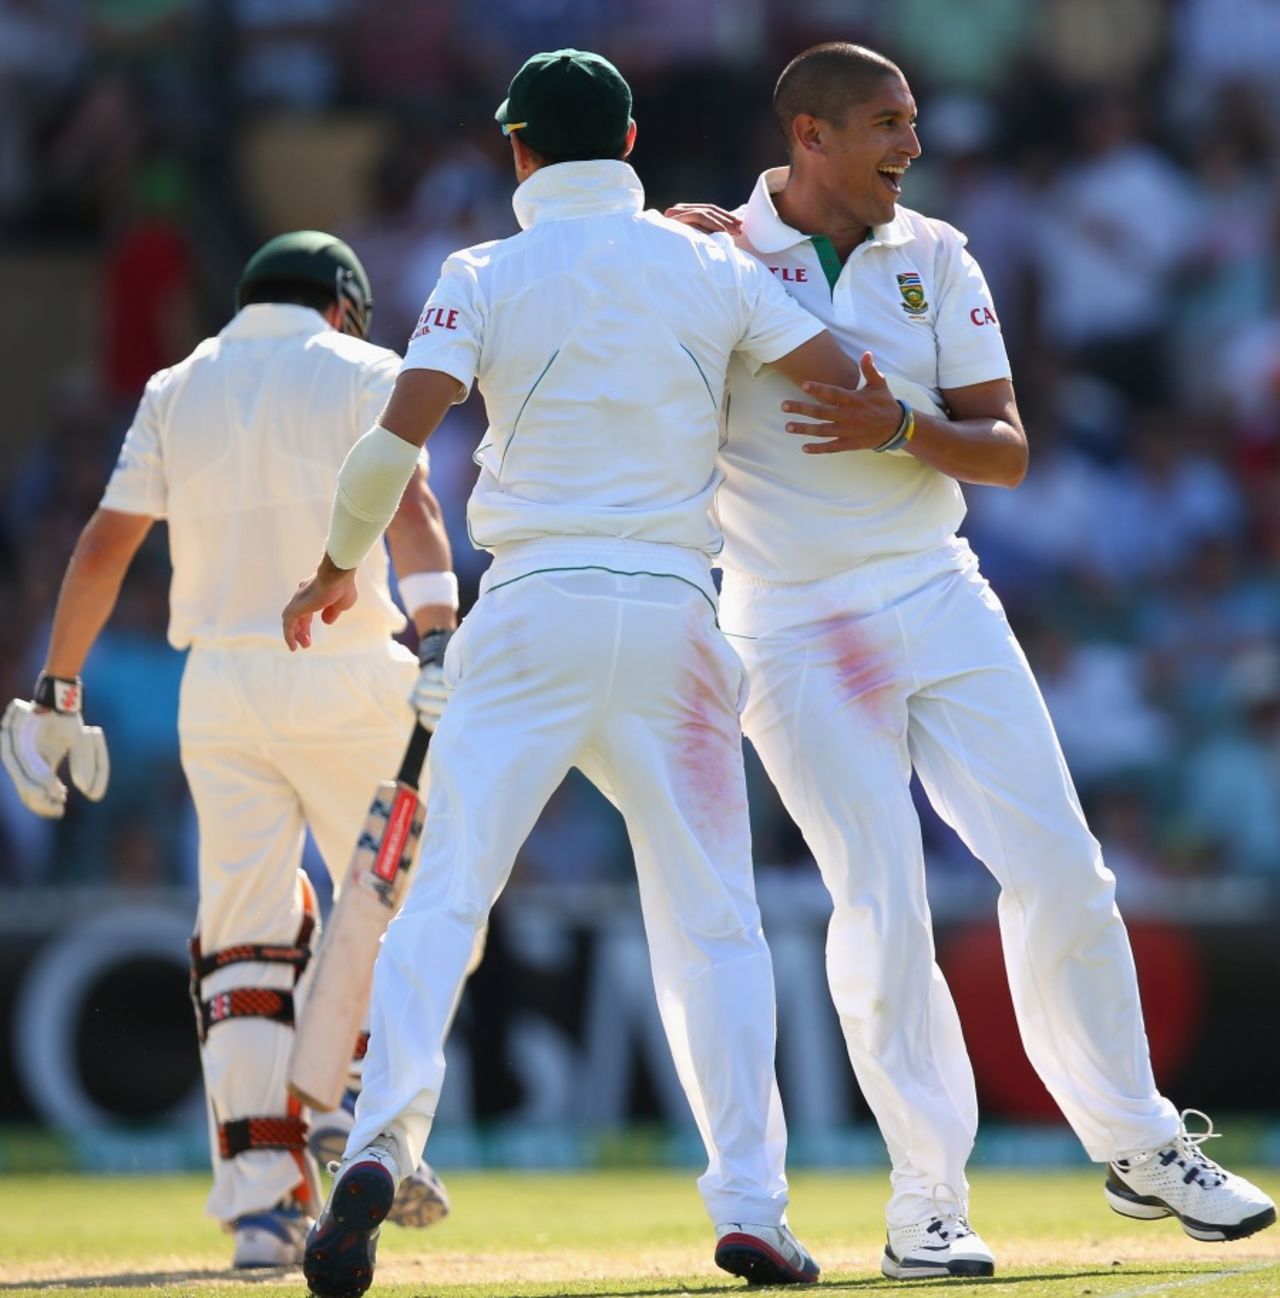 Rory Kleinveldt celebrates a wicket, Australia v South Africa, 2nd Test, Adelaide, 3rd day, November 24, 2012